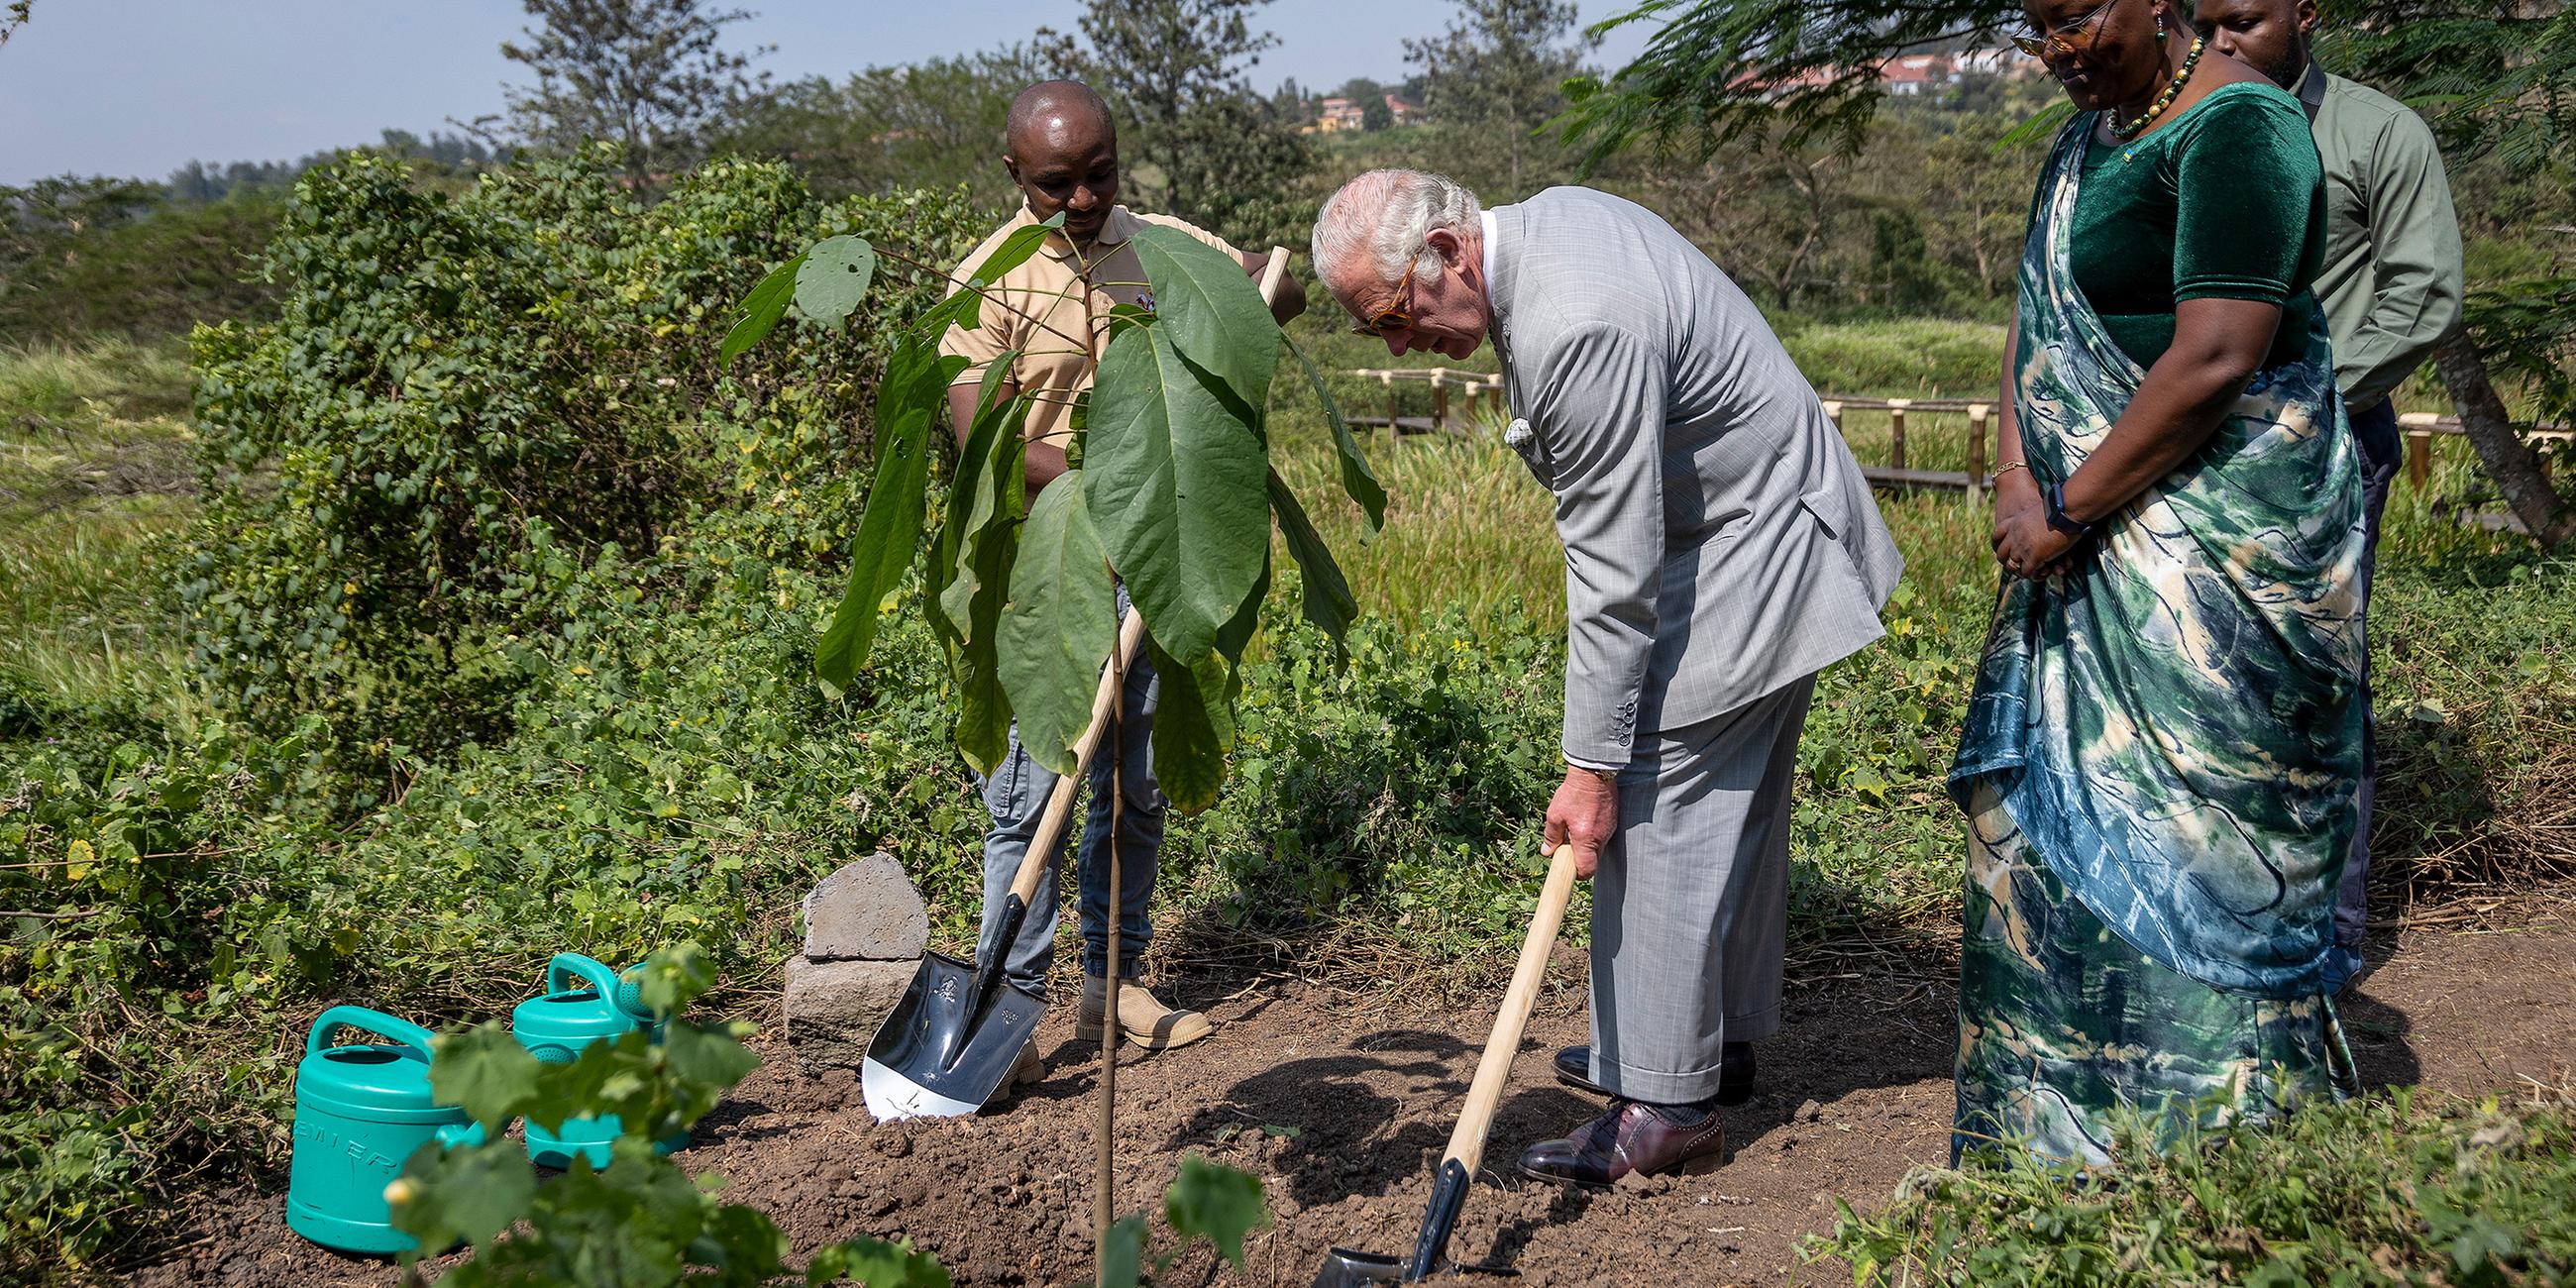 Charles pflanzt einen Baum in Ruanda mit Umweltministerin Jeanne d'Arc Mujawamariya (r.)